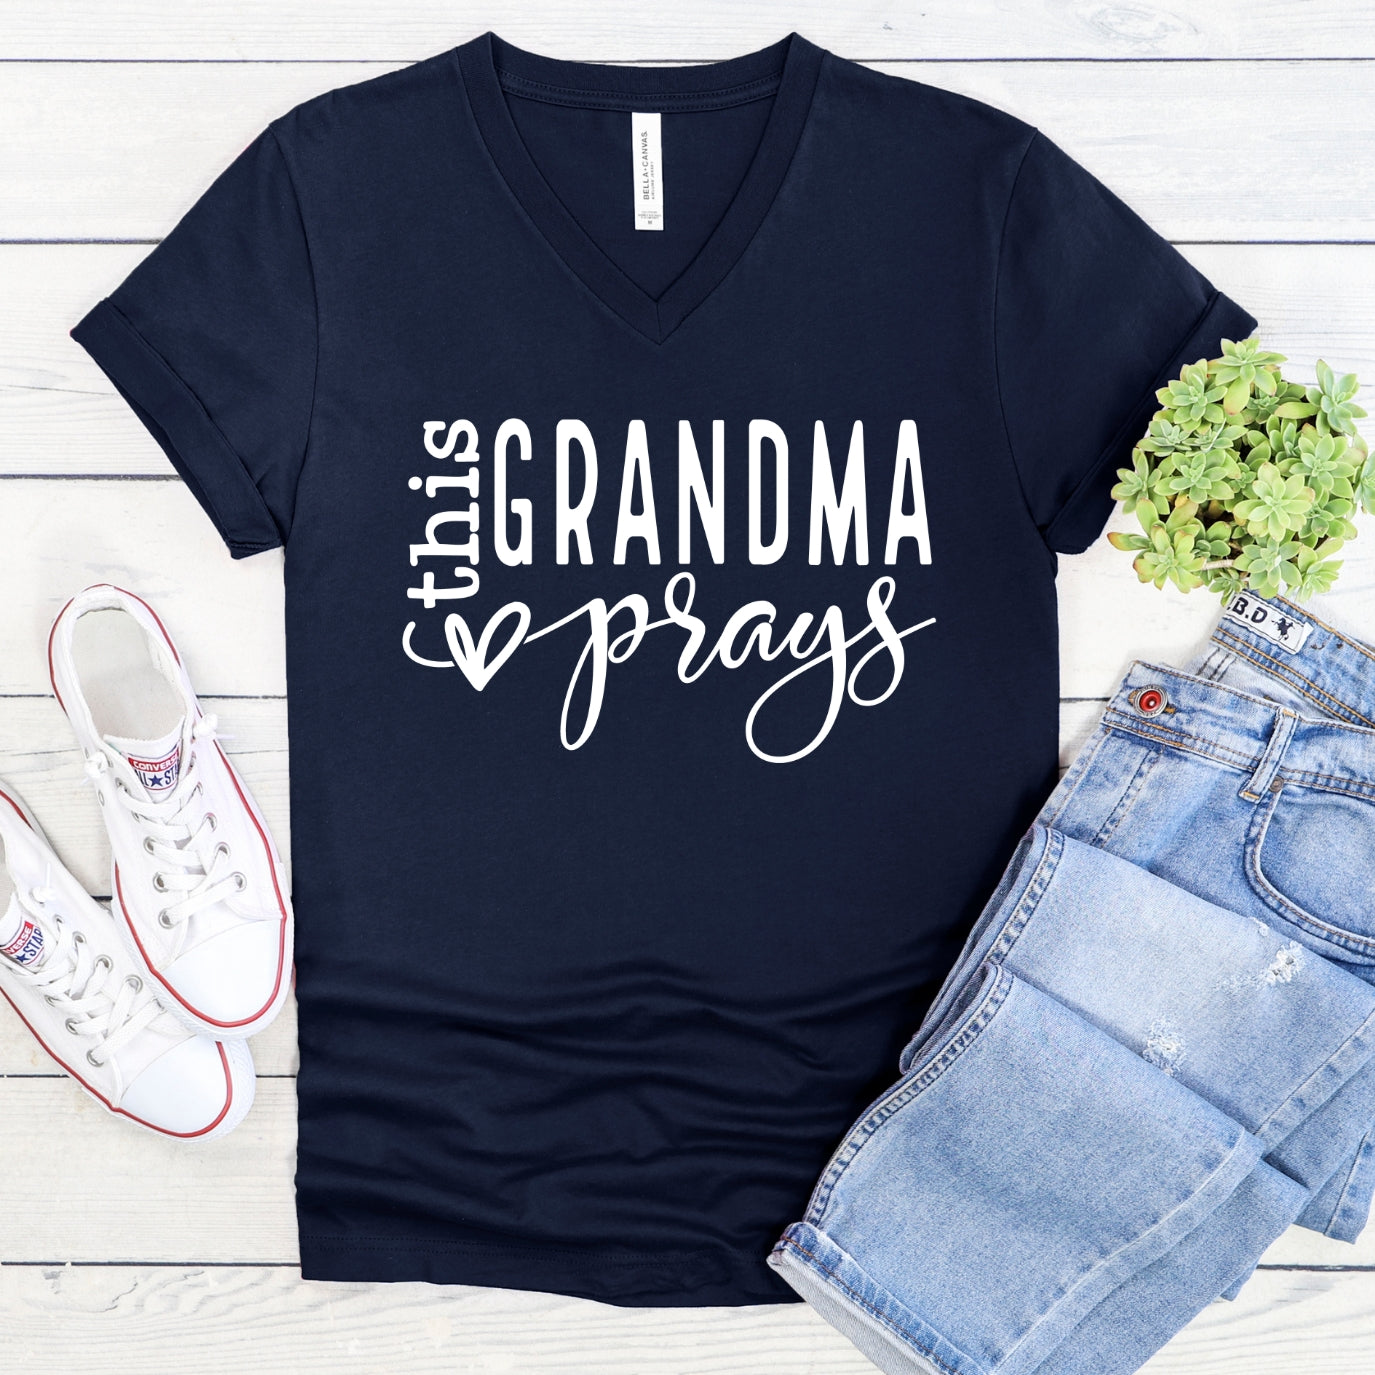 This Grandma Prays Women's V-Neck Shirt